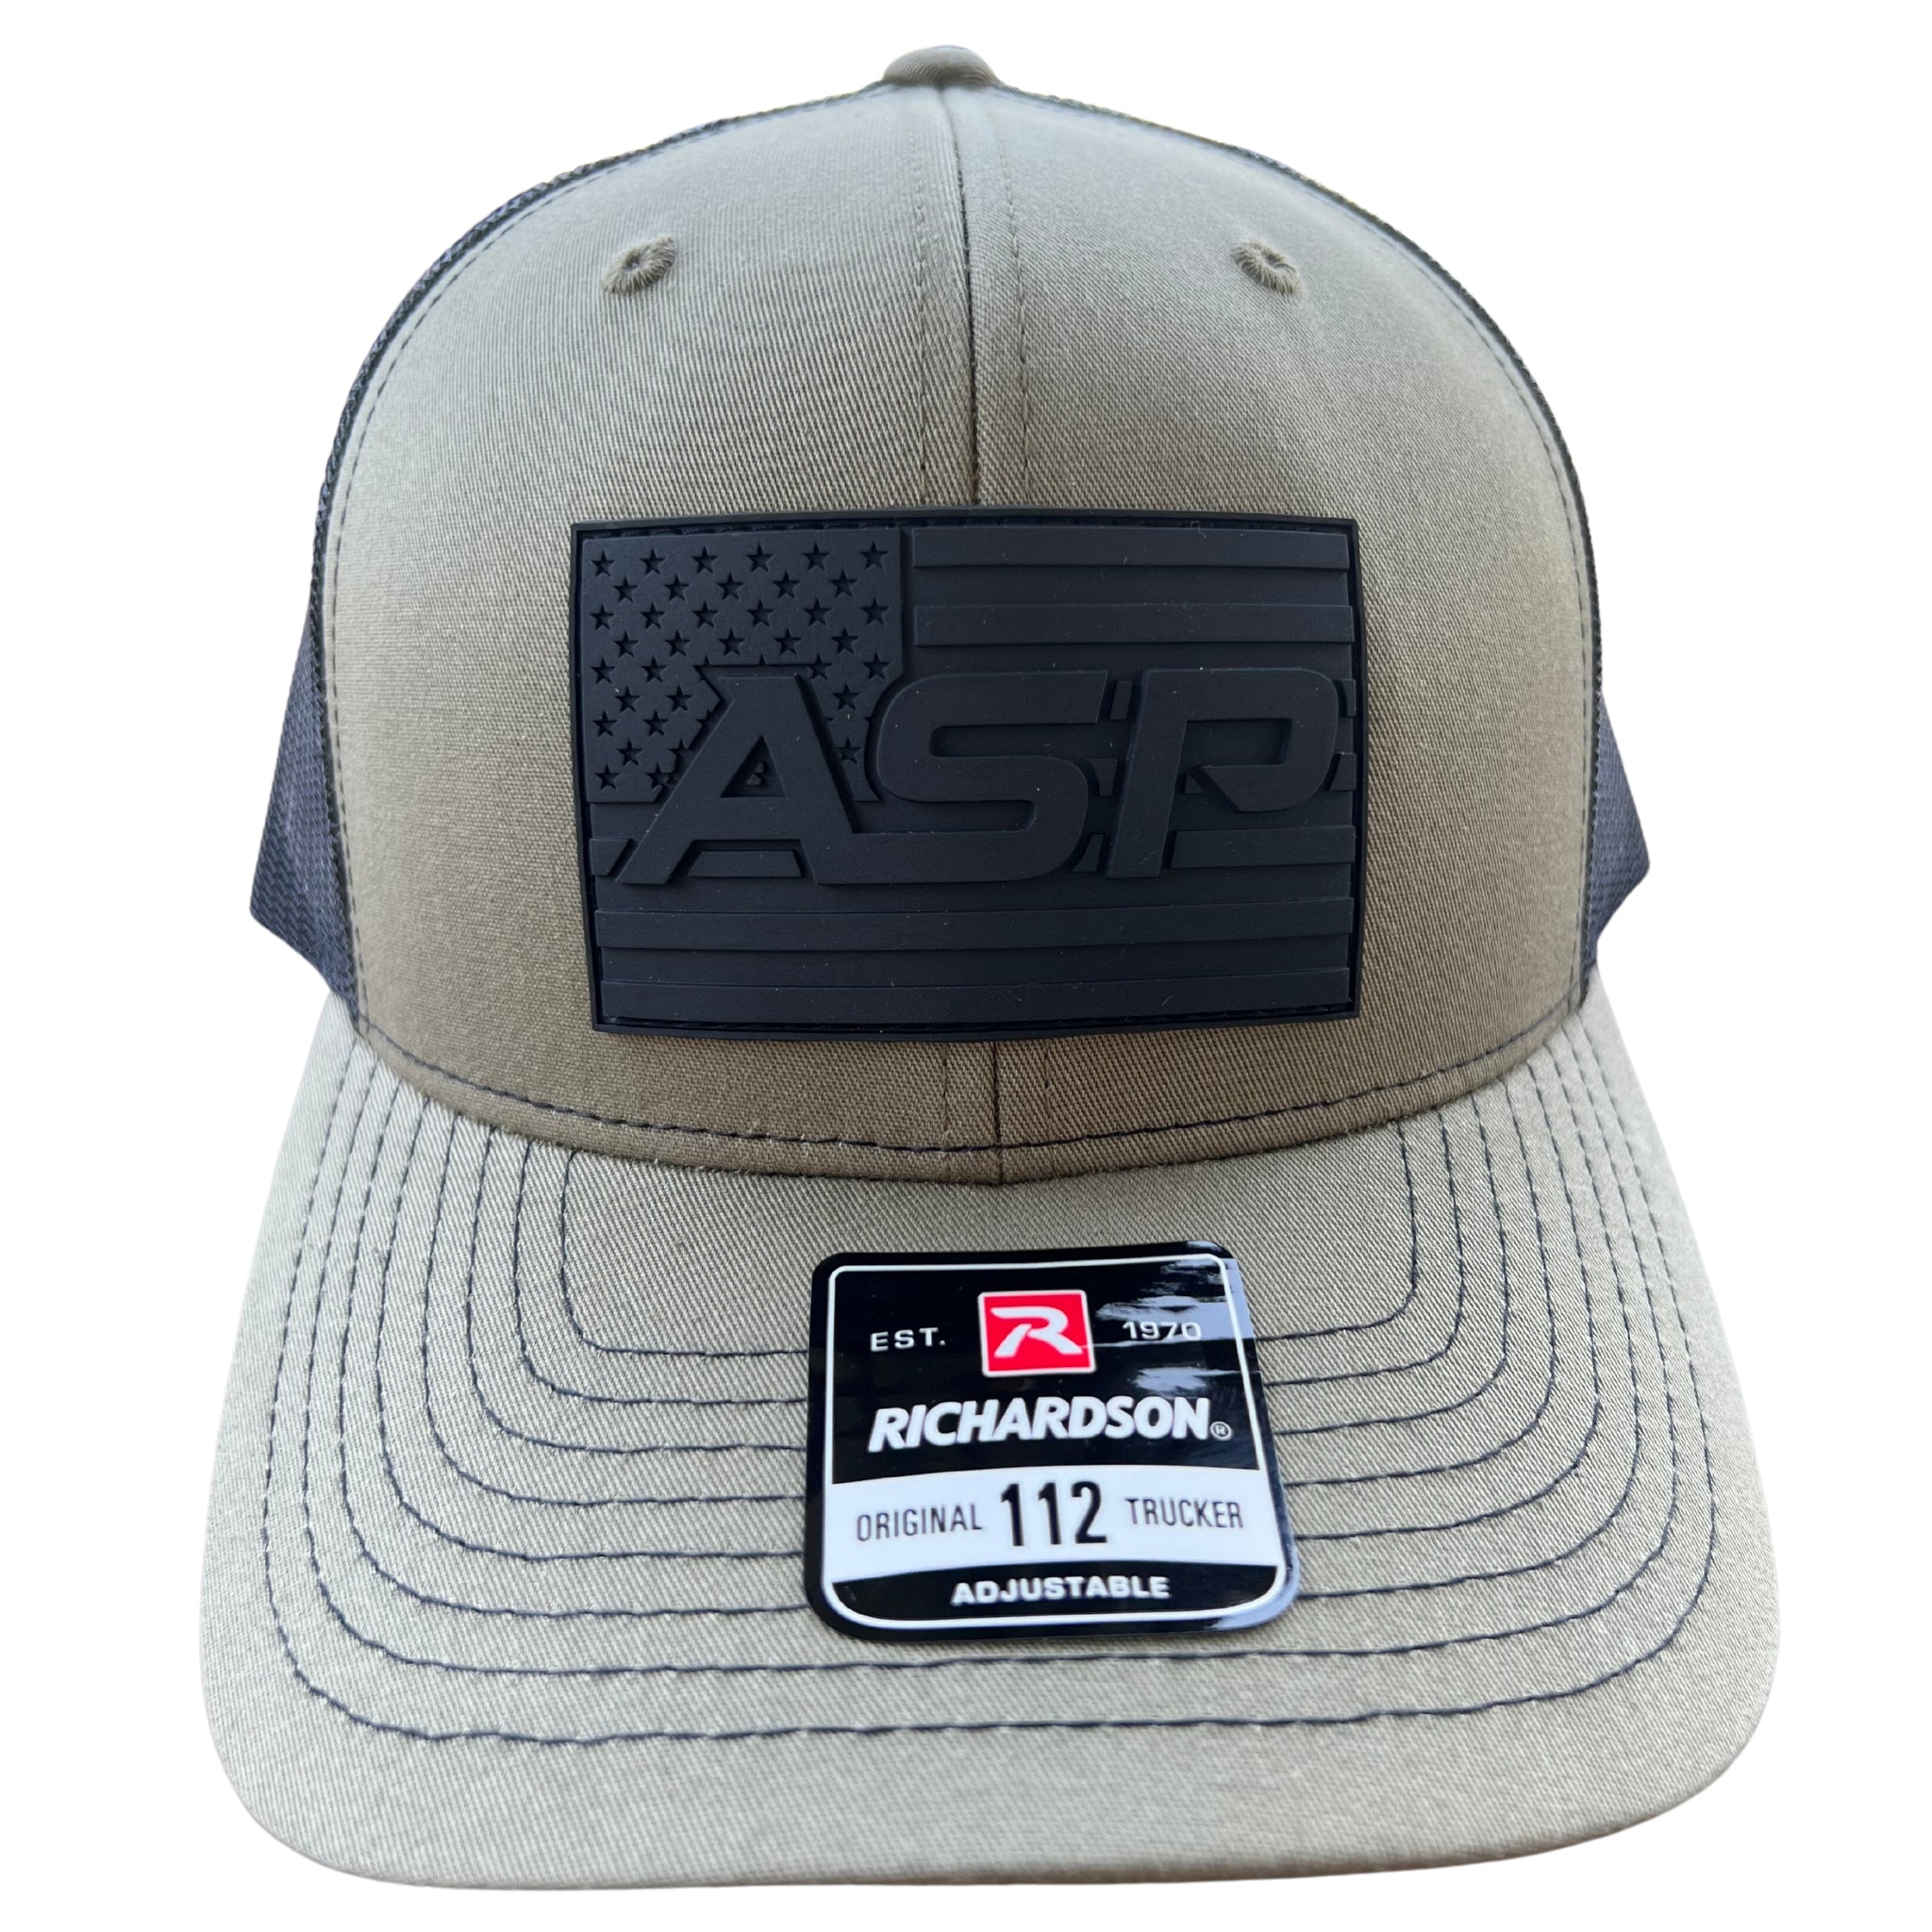 ASP USA Patch Series Snapback Hat